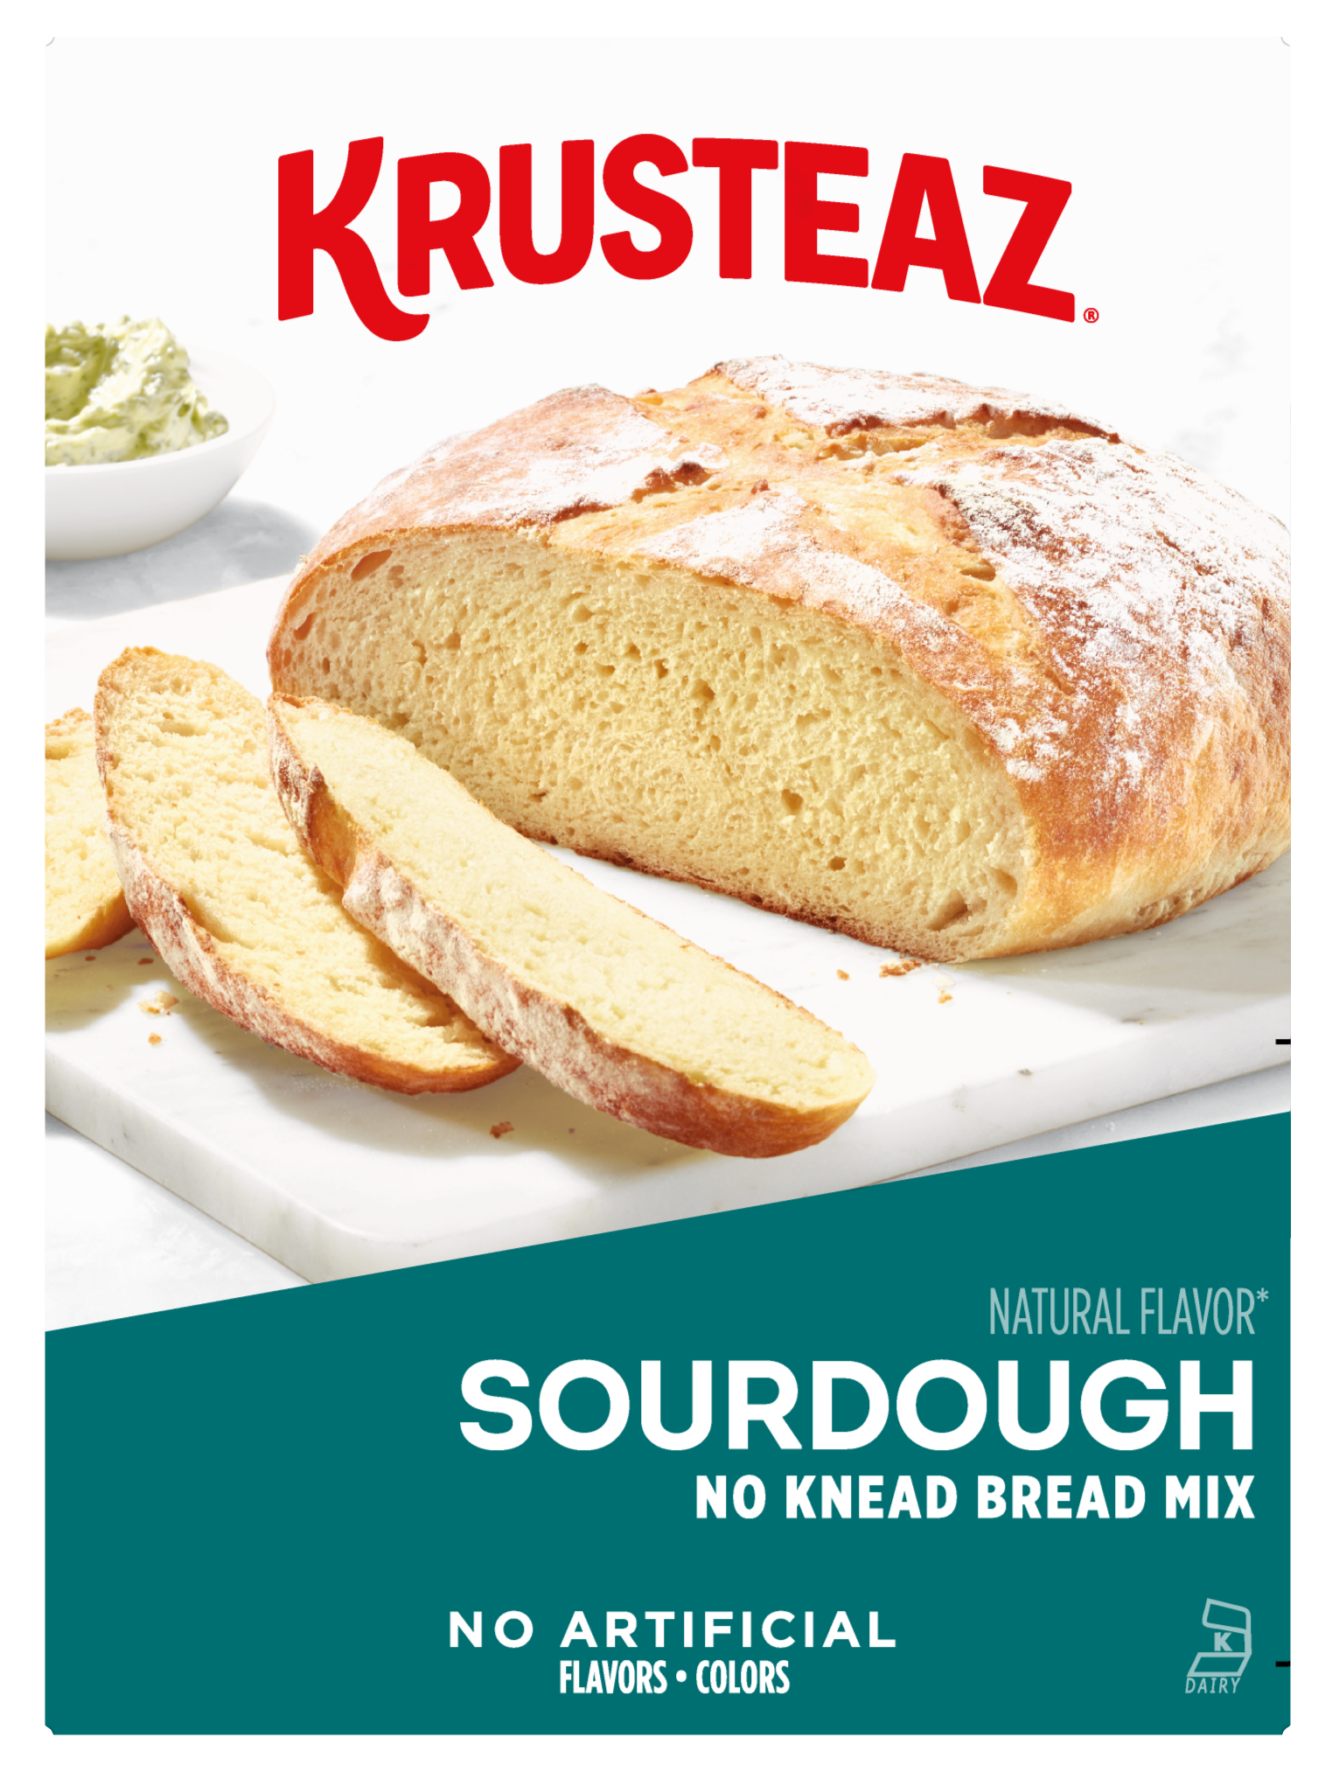 Box of Krusteaz Sourdough No Knead Bread Mix.